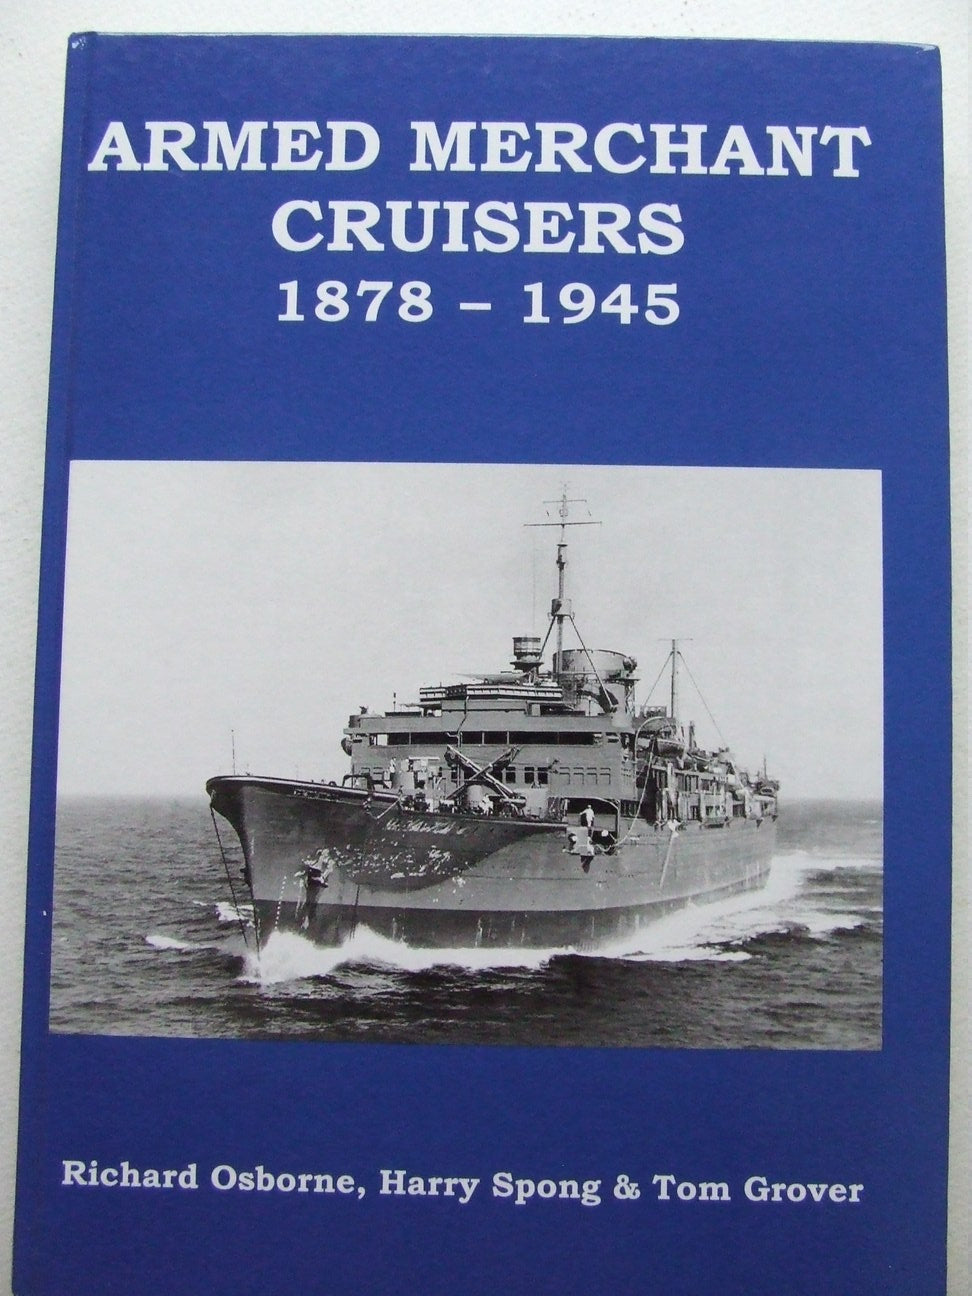 Armed Merchant Cruisers 1878-1945